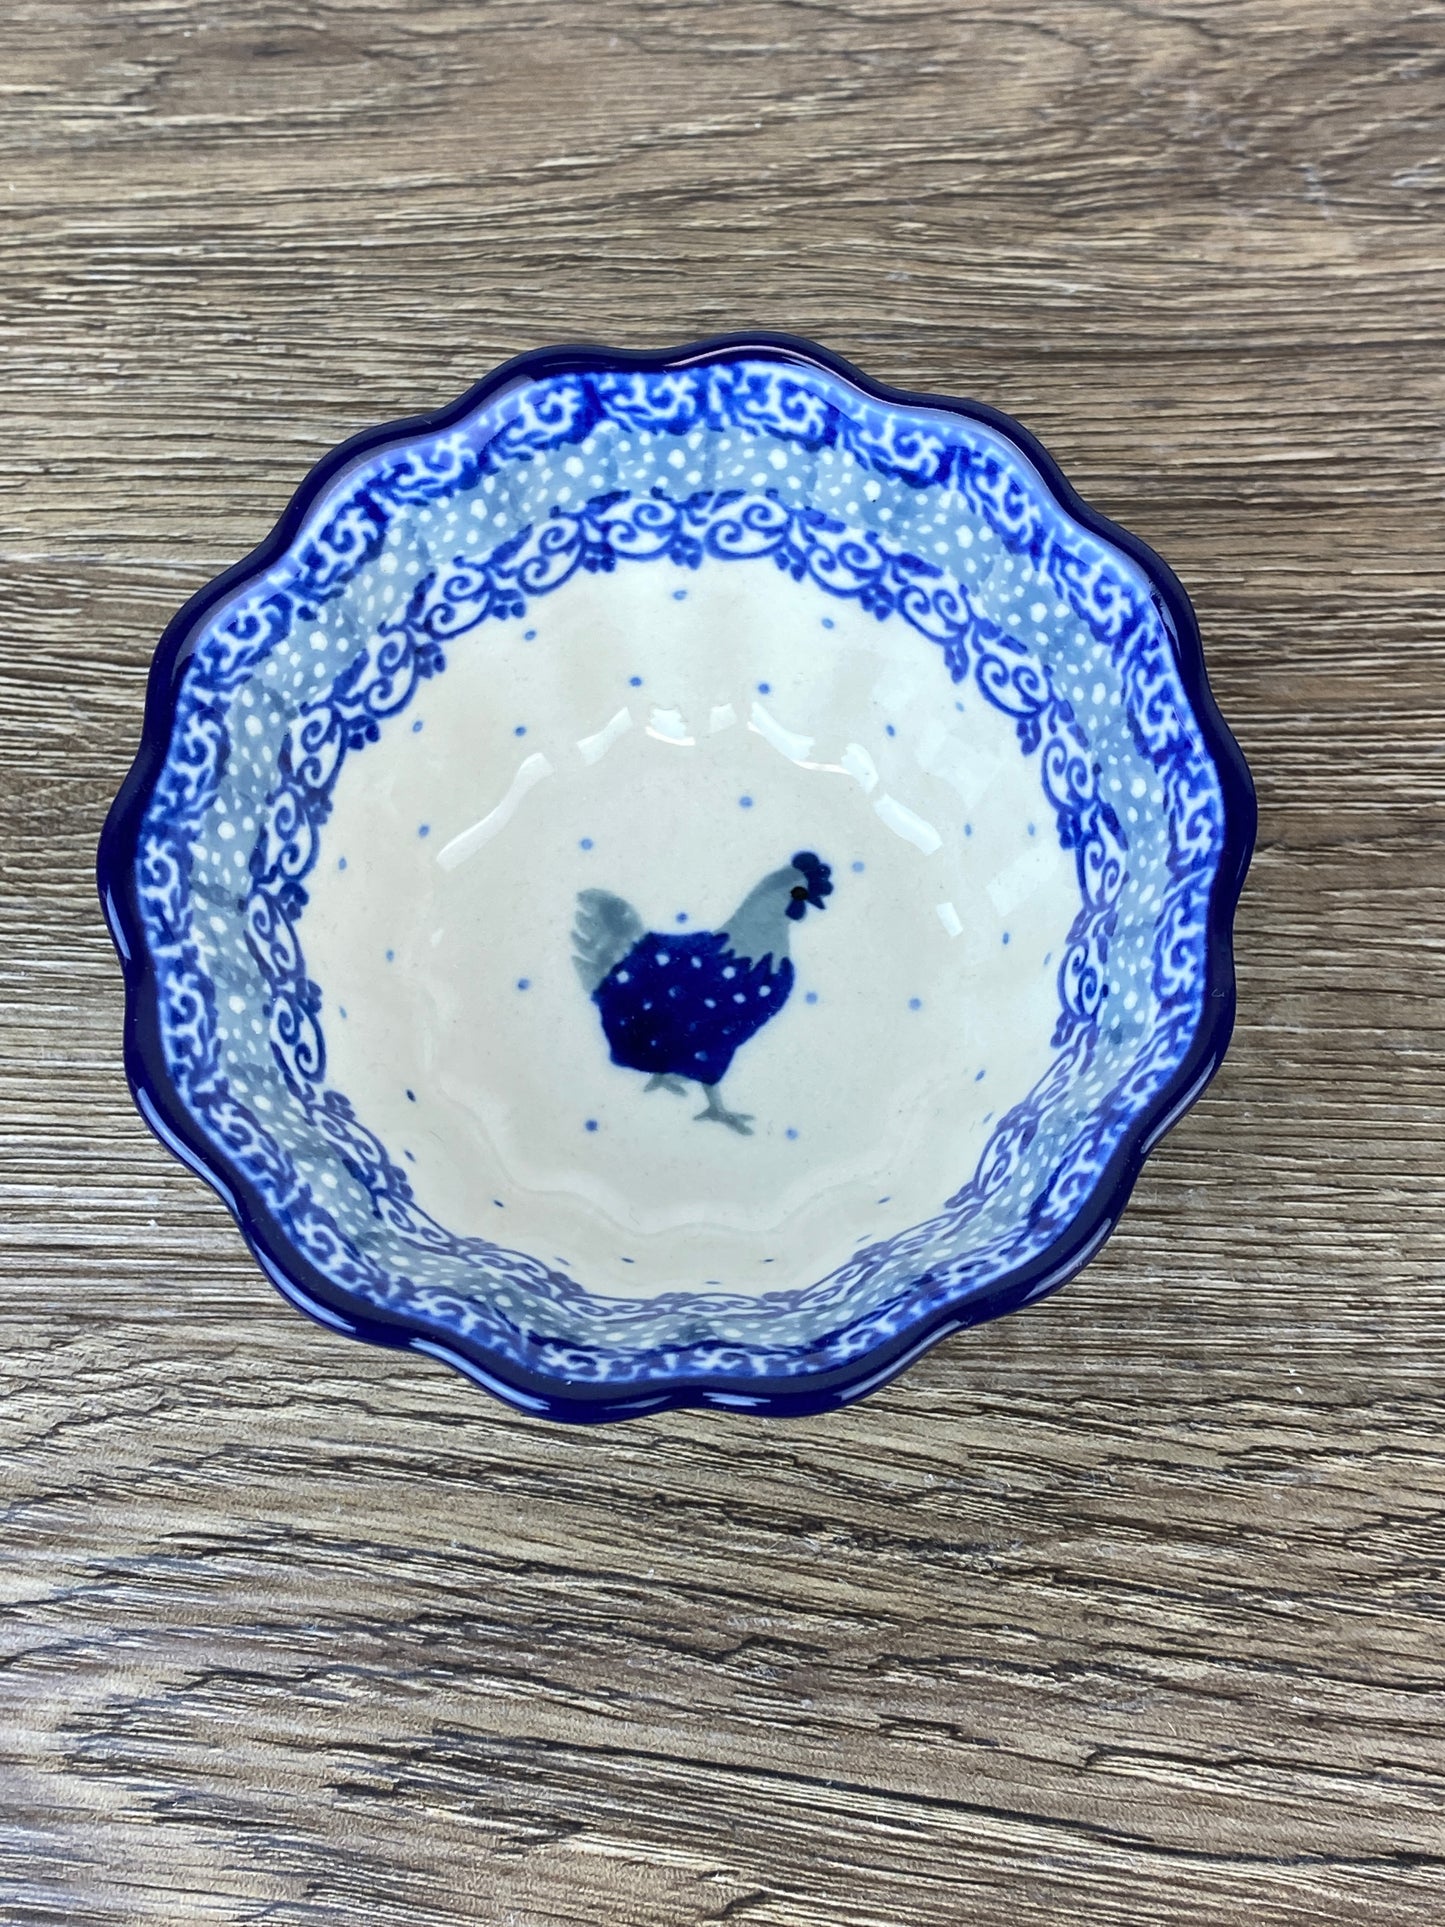 Little Scalloped Bowl - Shape 916 - Pattern 2597